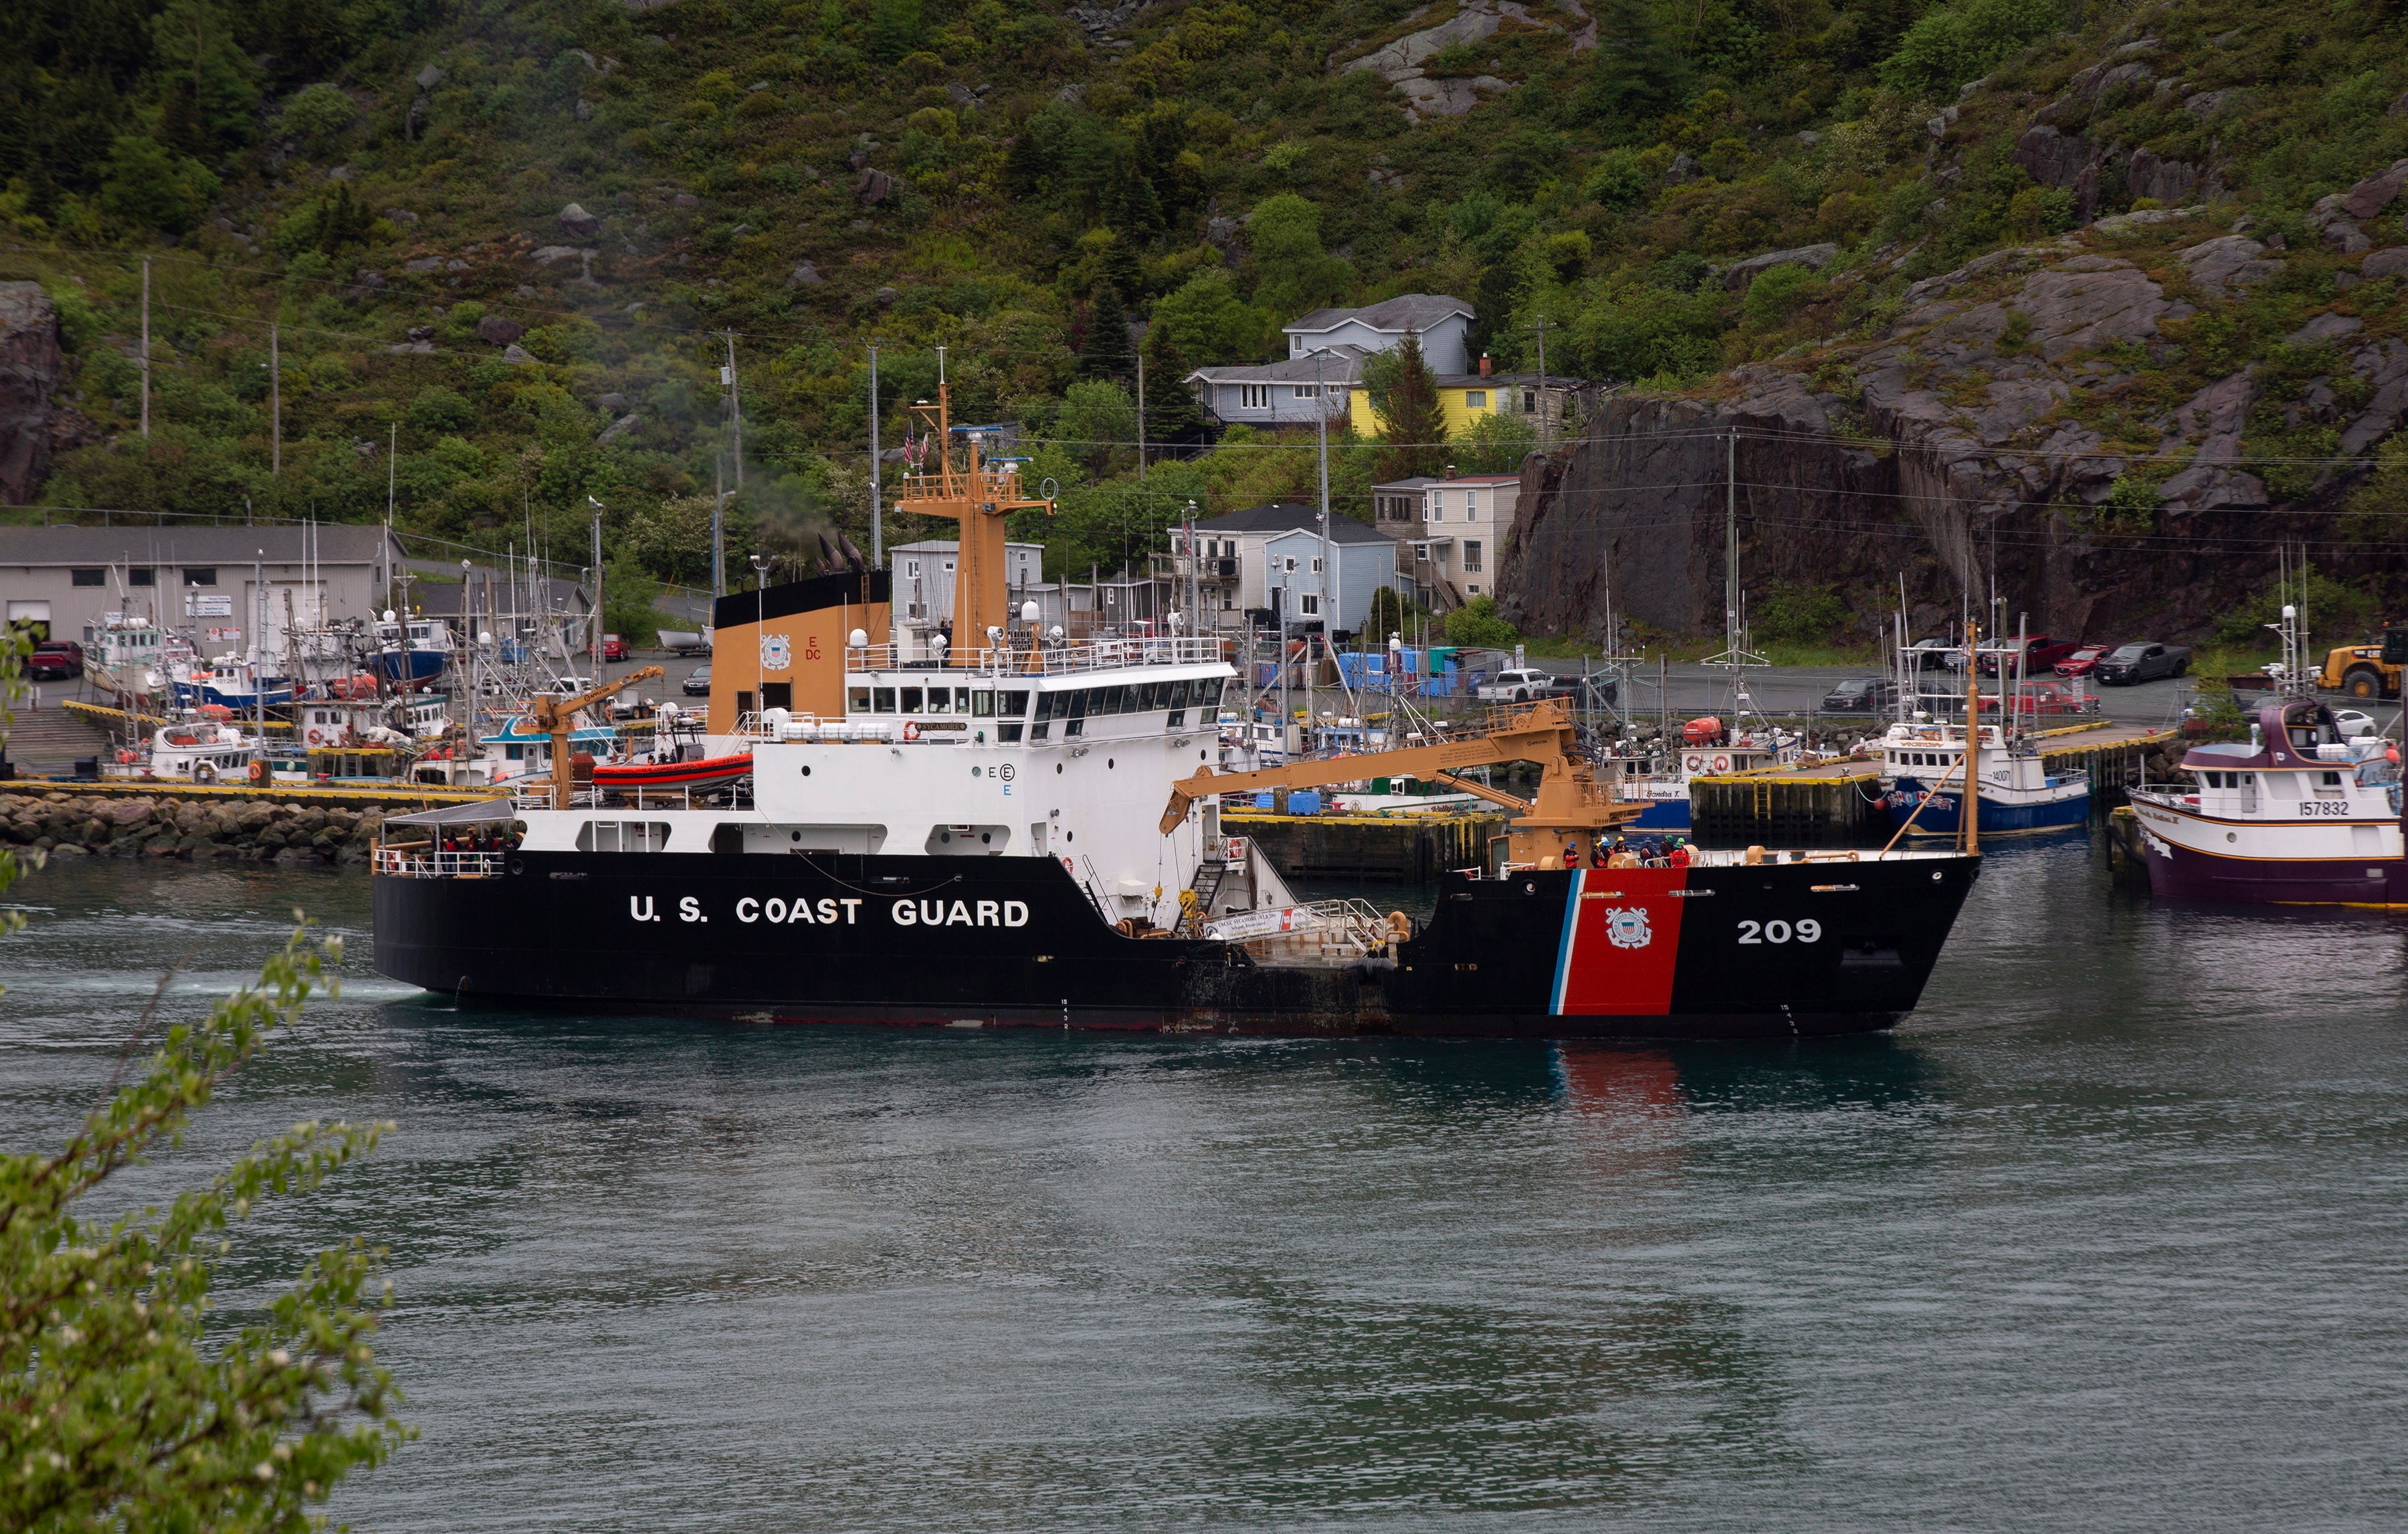 US Coast Guard ship arrives in the harbor of St John’s, Newfoundland